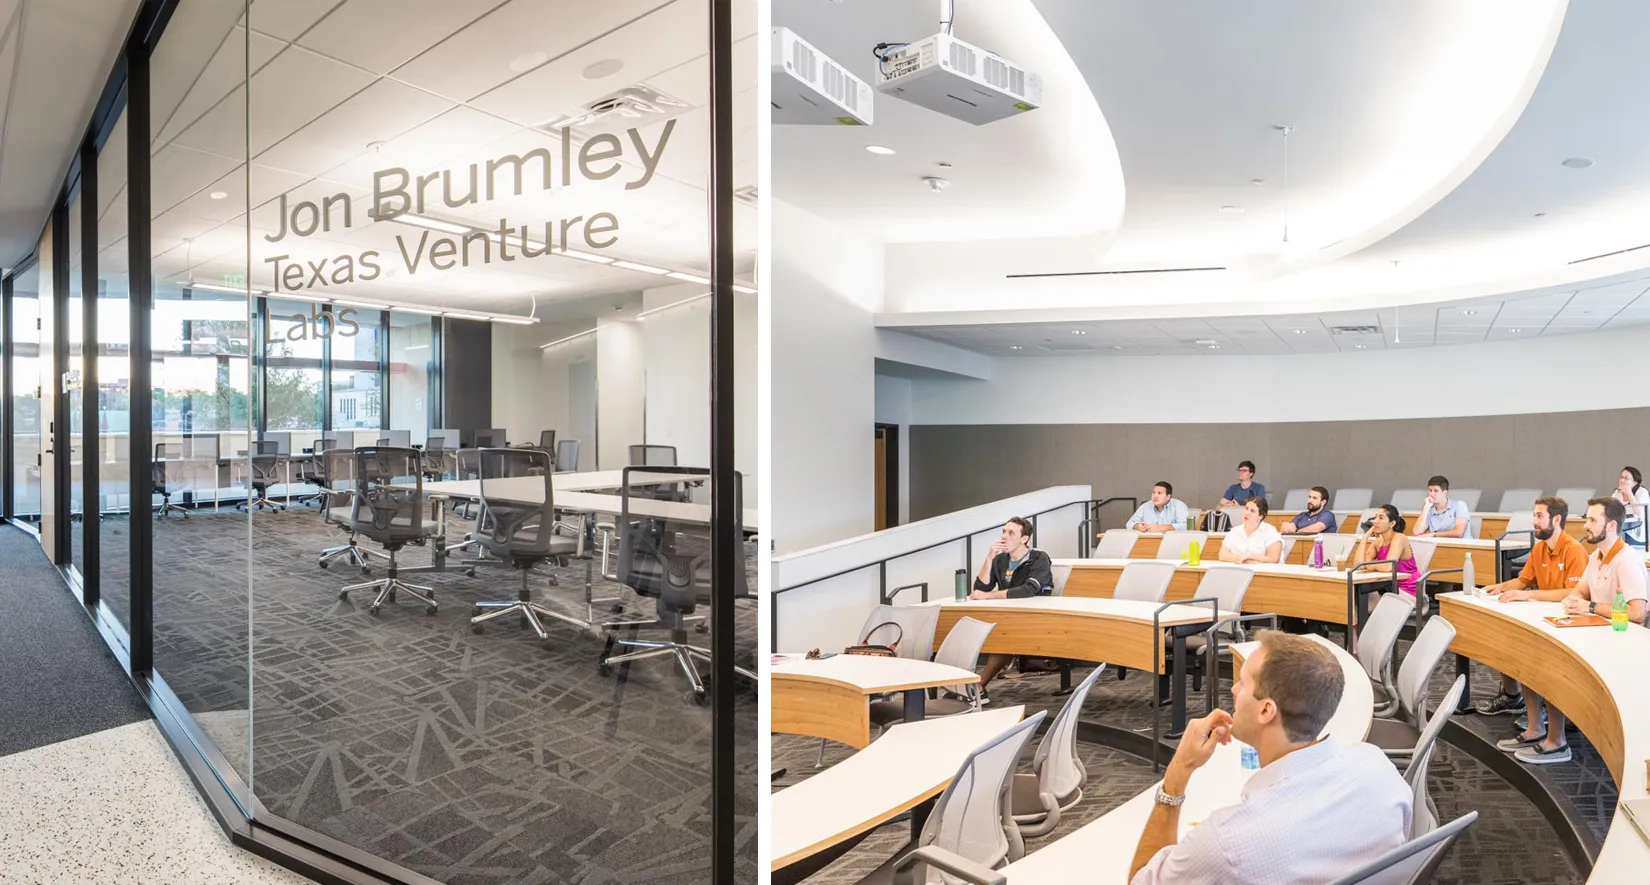 International Business School Launches the Jon Brumley Texas Venture Labs for Aspiring Entrepreneurs